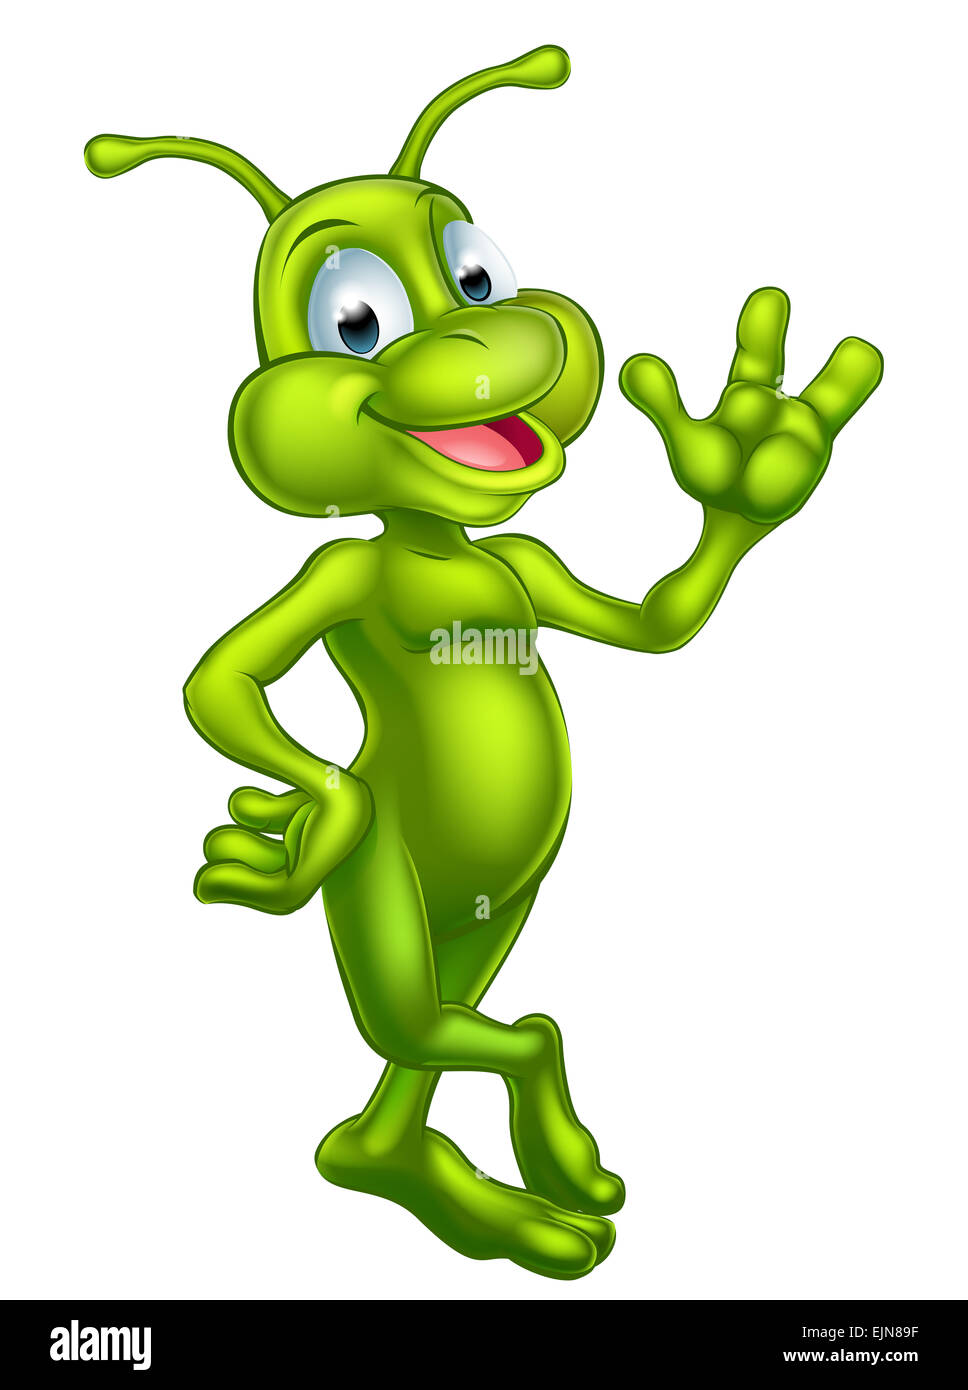 An illustration of a cute cartoon green alien character Stock Photo